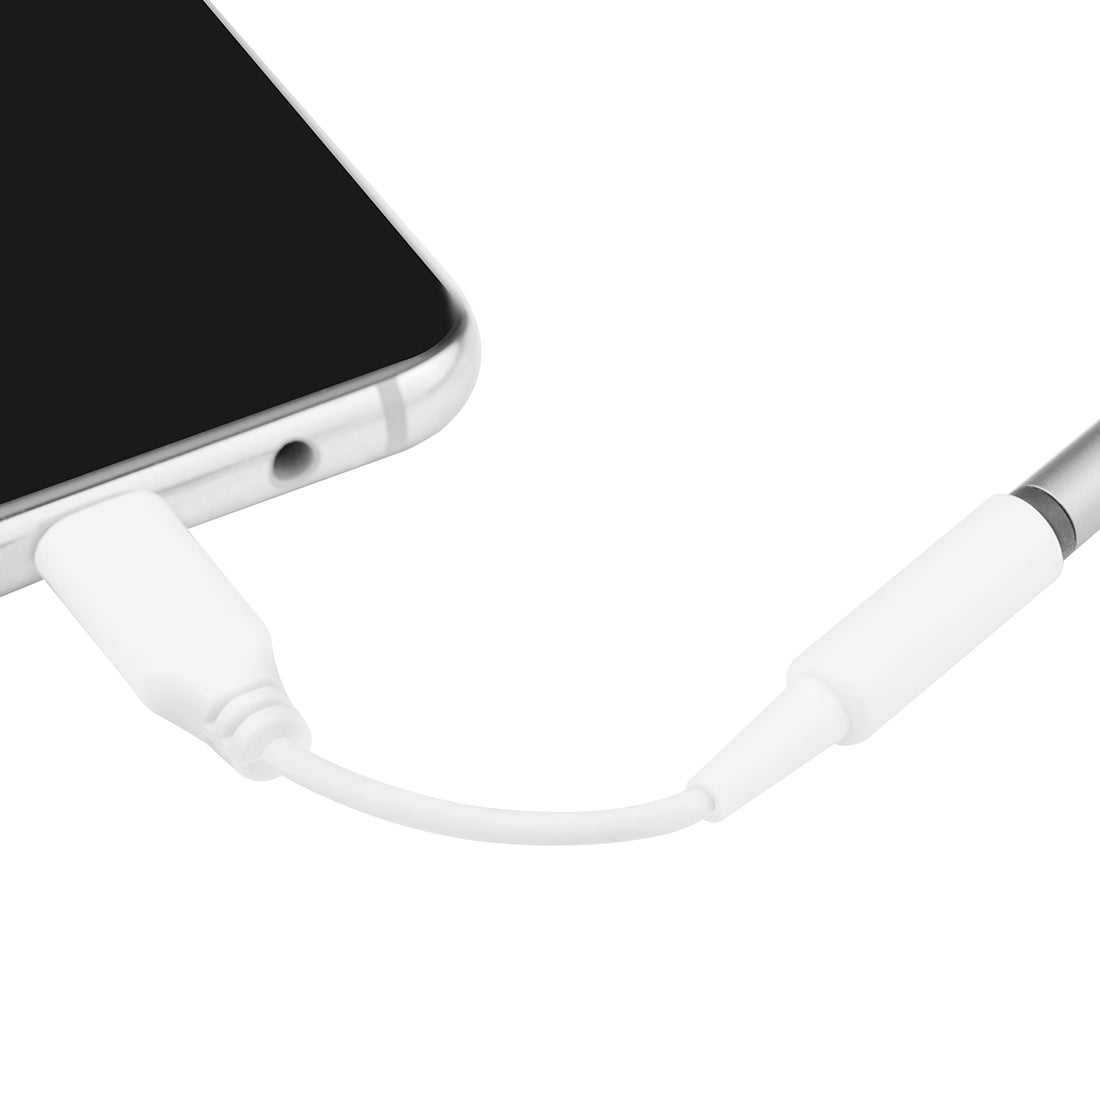 Apple Usb C To 3.5 Mm Headphone Jack Adapterapple Usb-c To 3.5mm Headphone  Jack Adapter - Compatible With Iphone, Samsung, Huawei